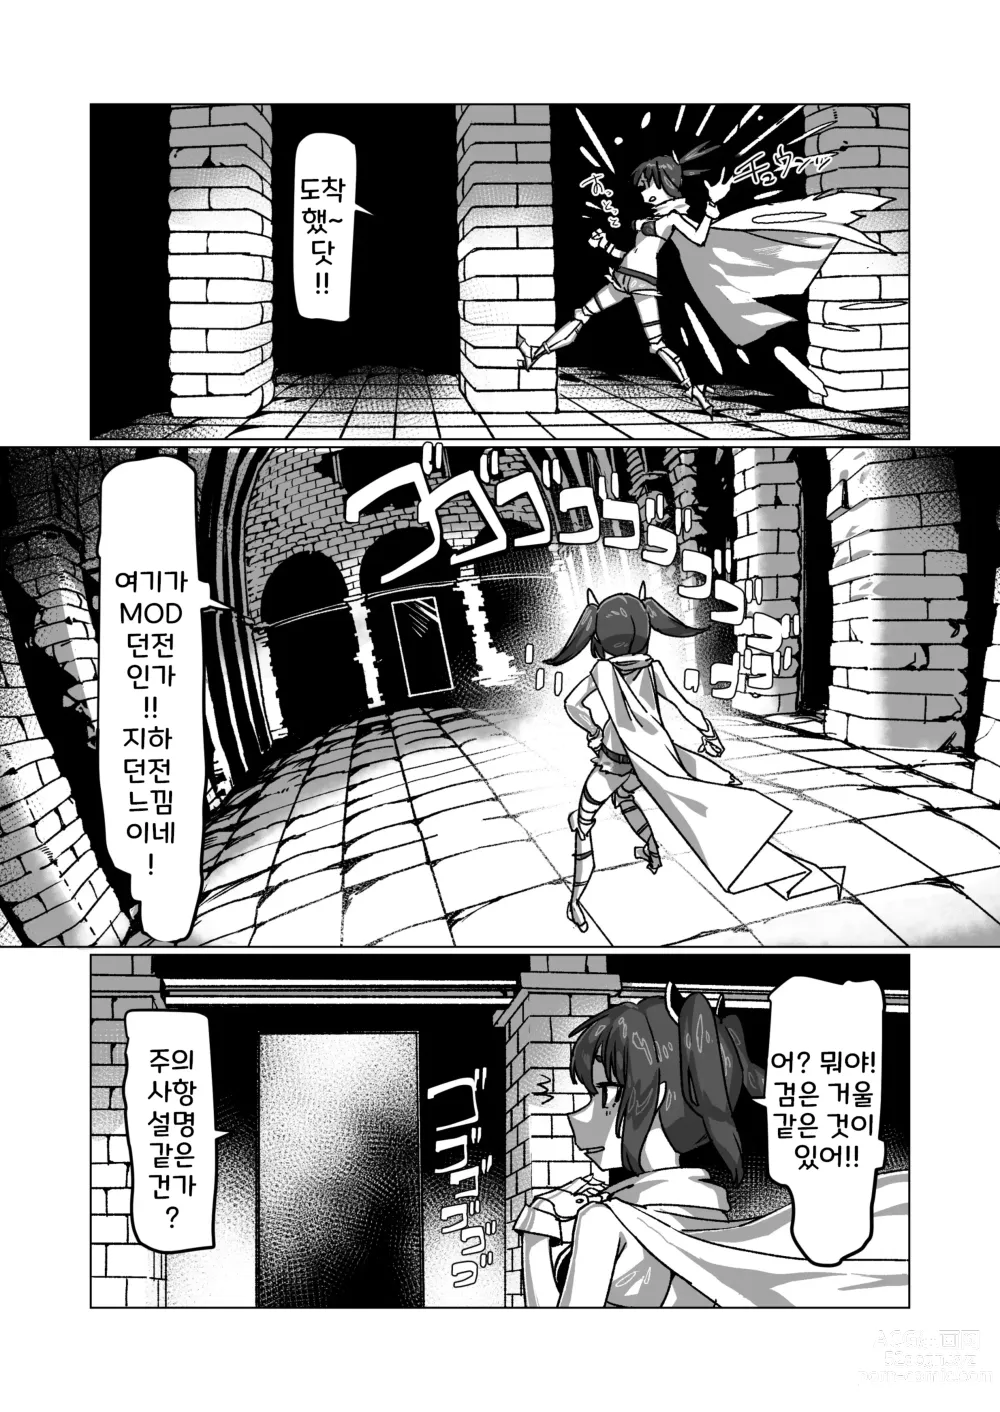 Page 5 of doujinshi 자신을 토호쿠 키리타 라고 믿고있는 키리탄의 풀 다이브 VR 던전